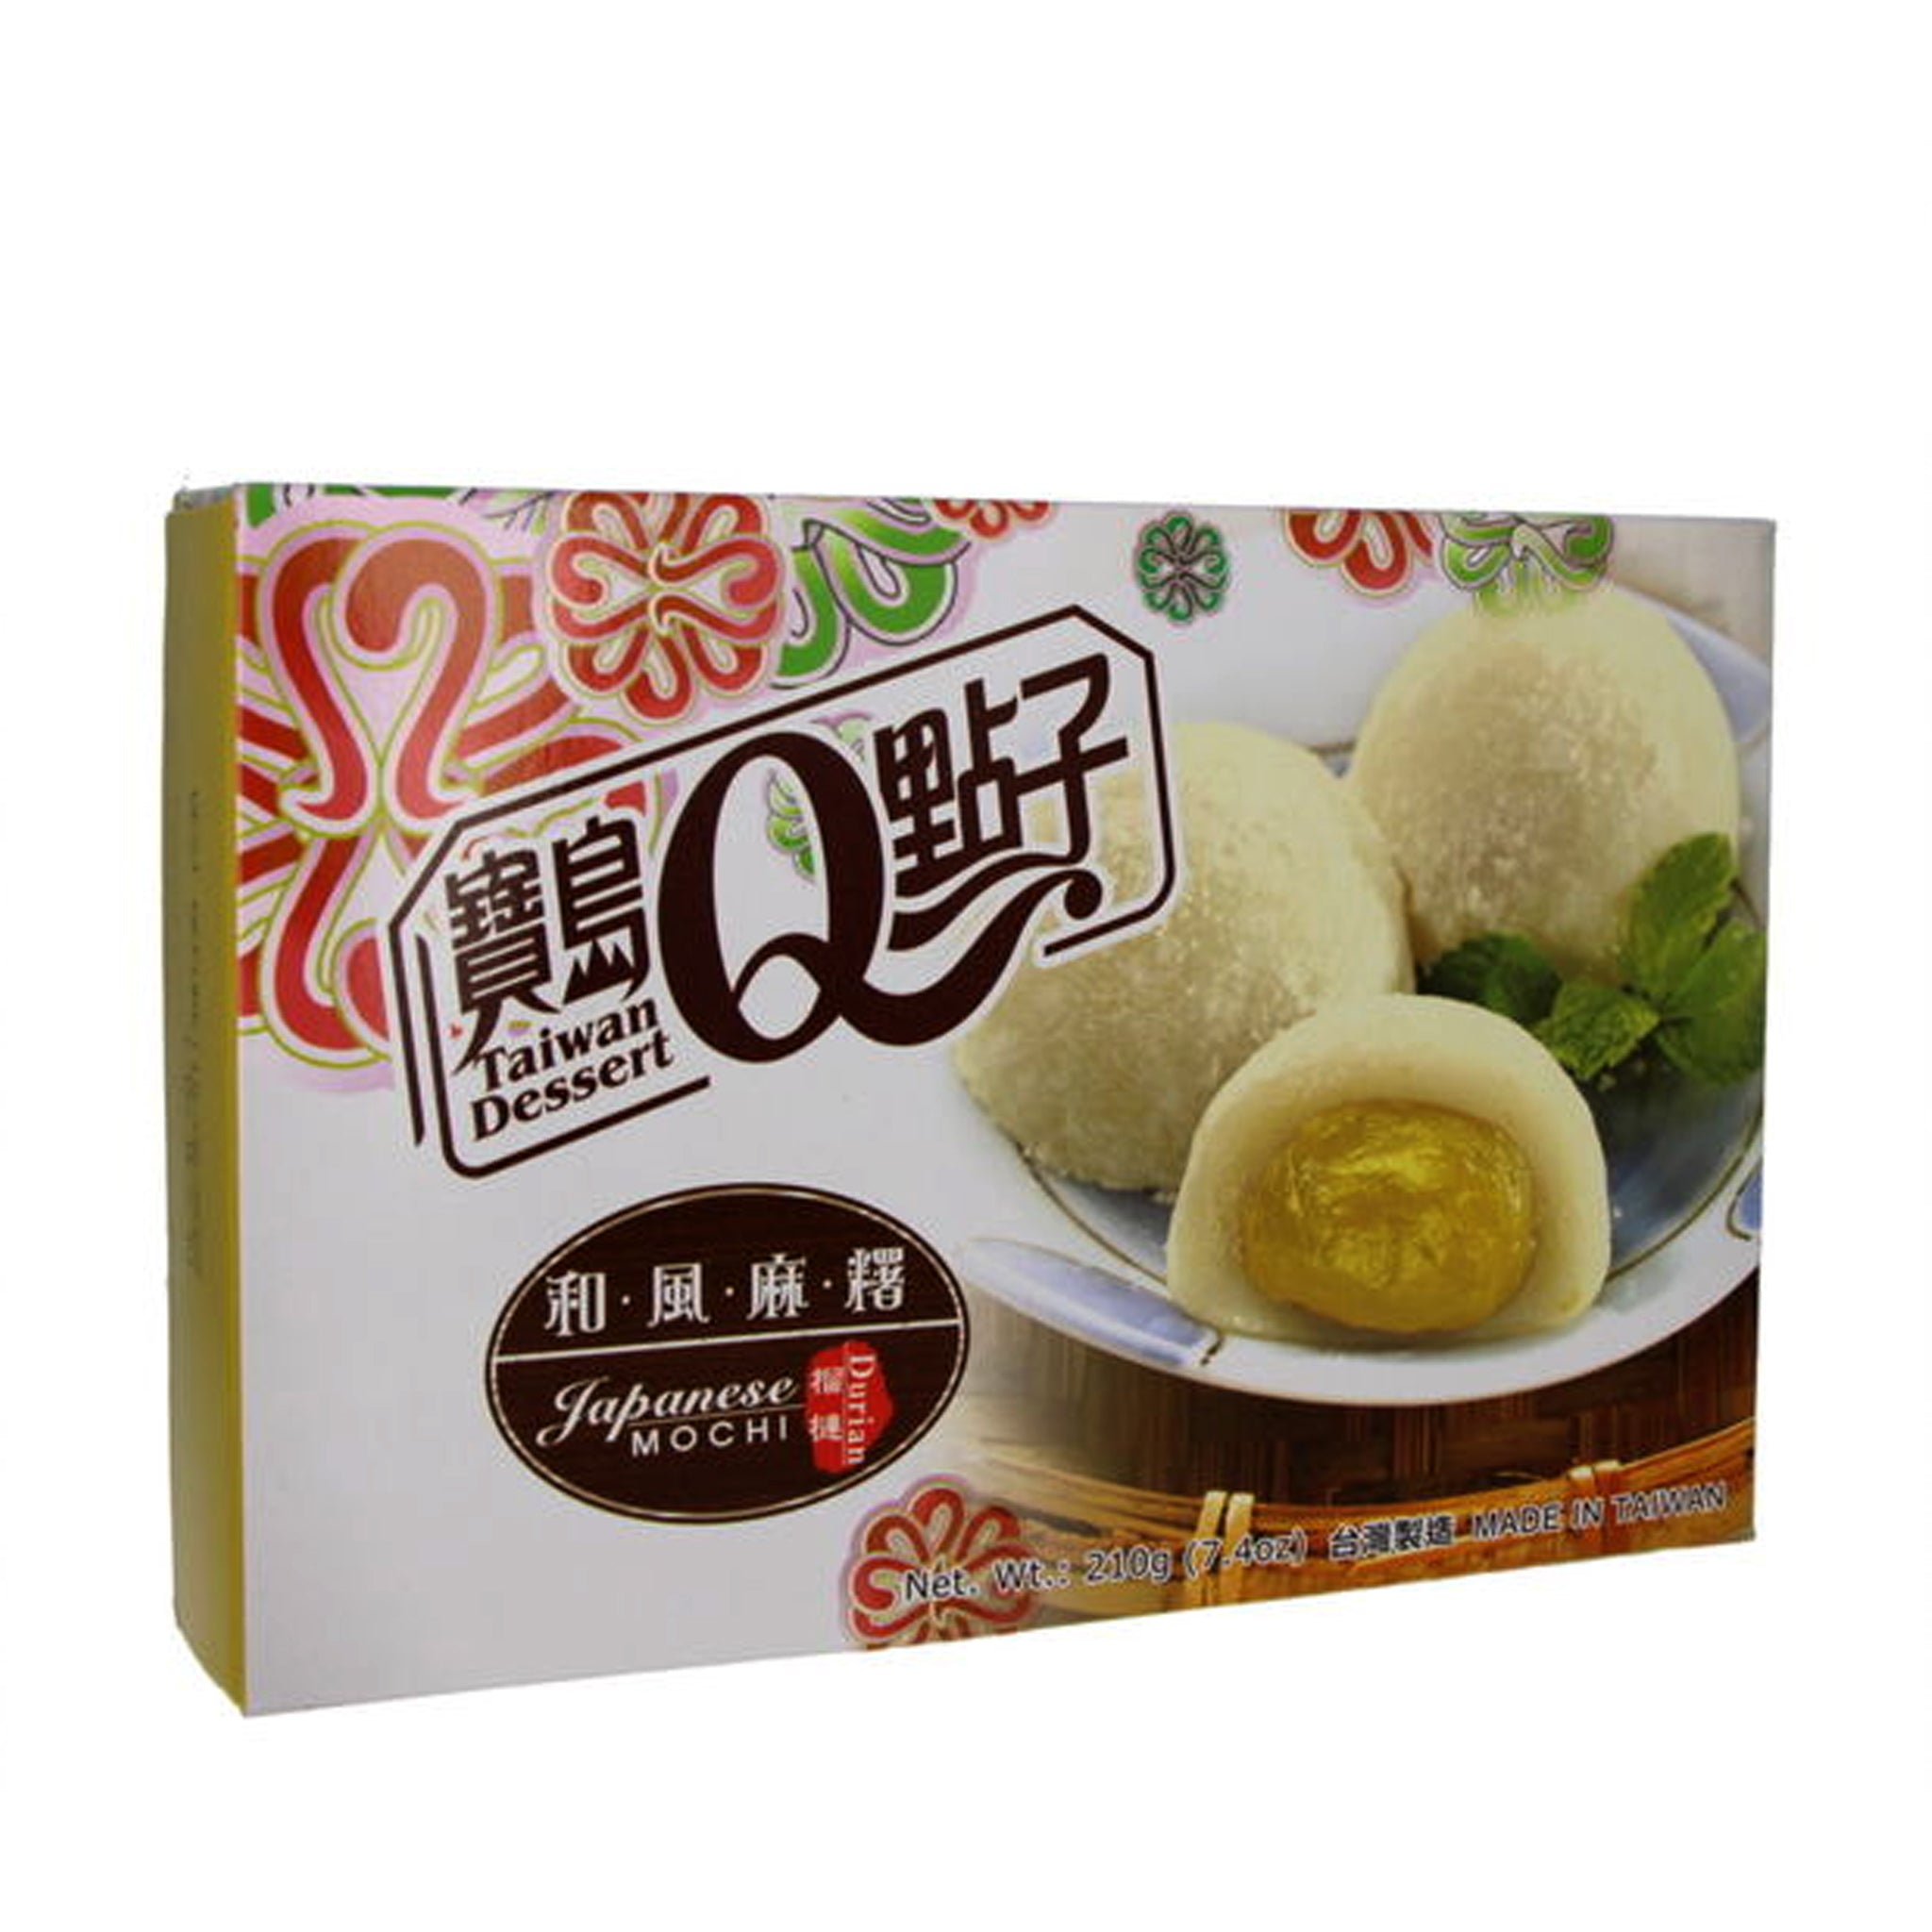 Japanese Style Mochi Durian מוצ'י חטיף יפני פרי הדוריאן